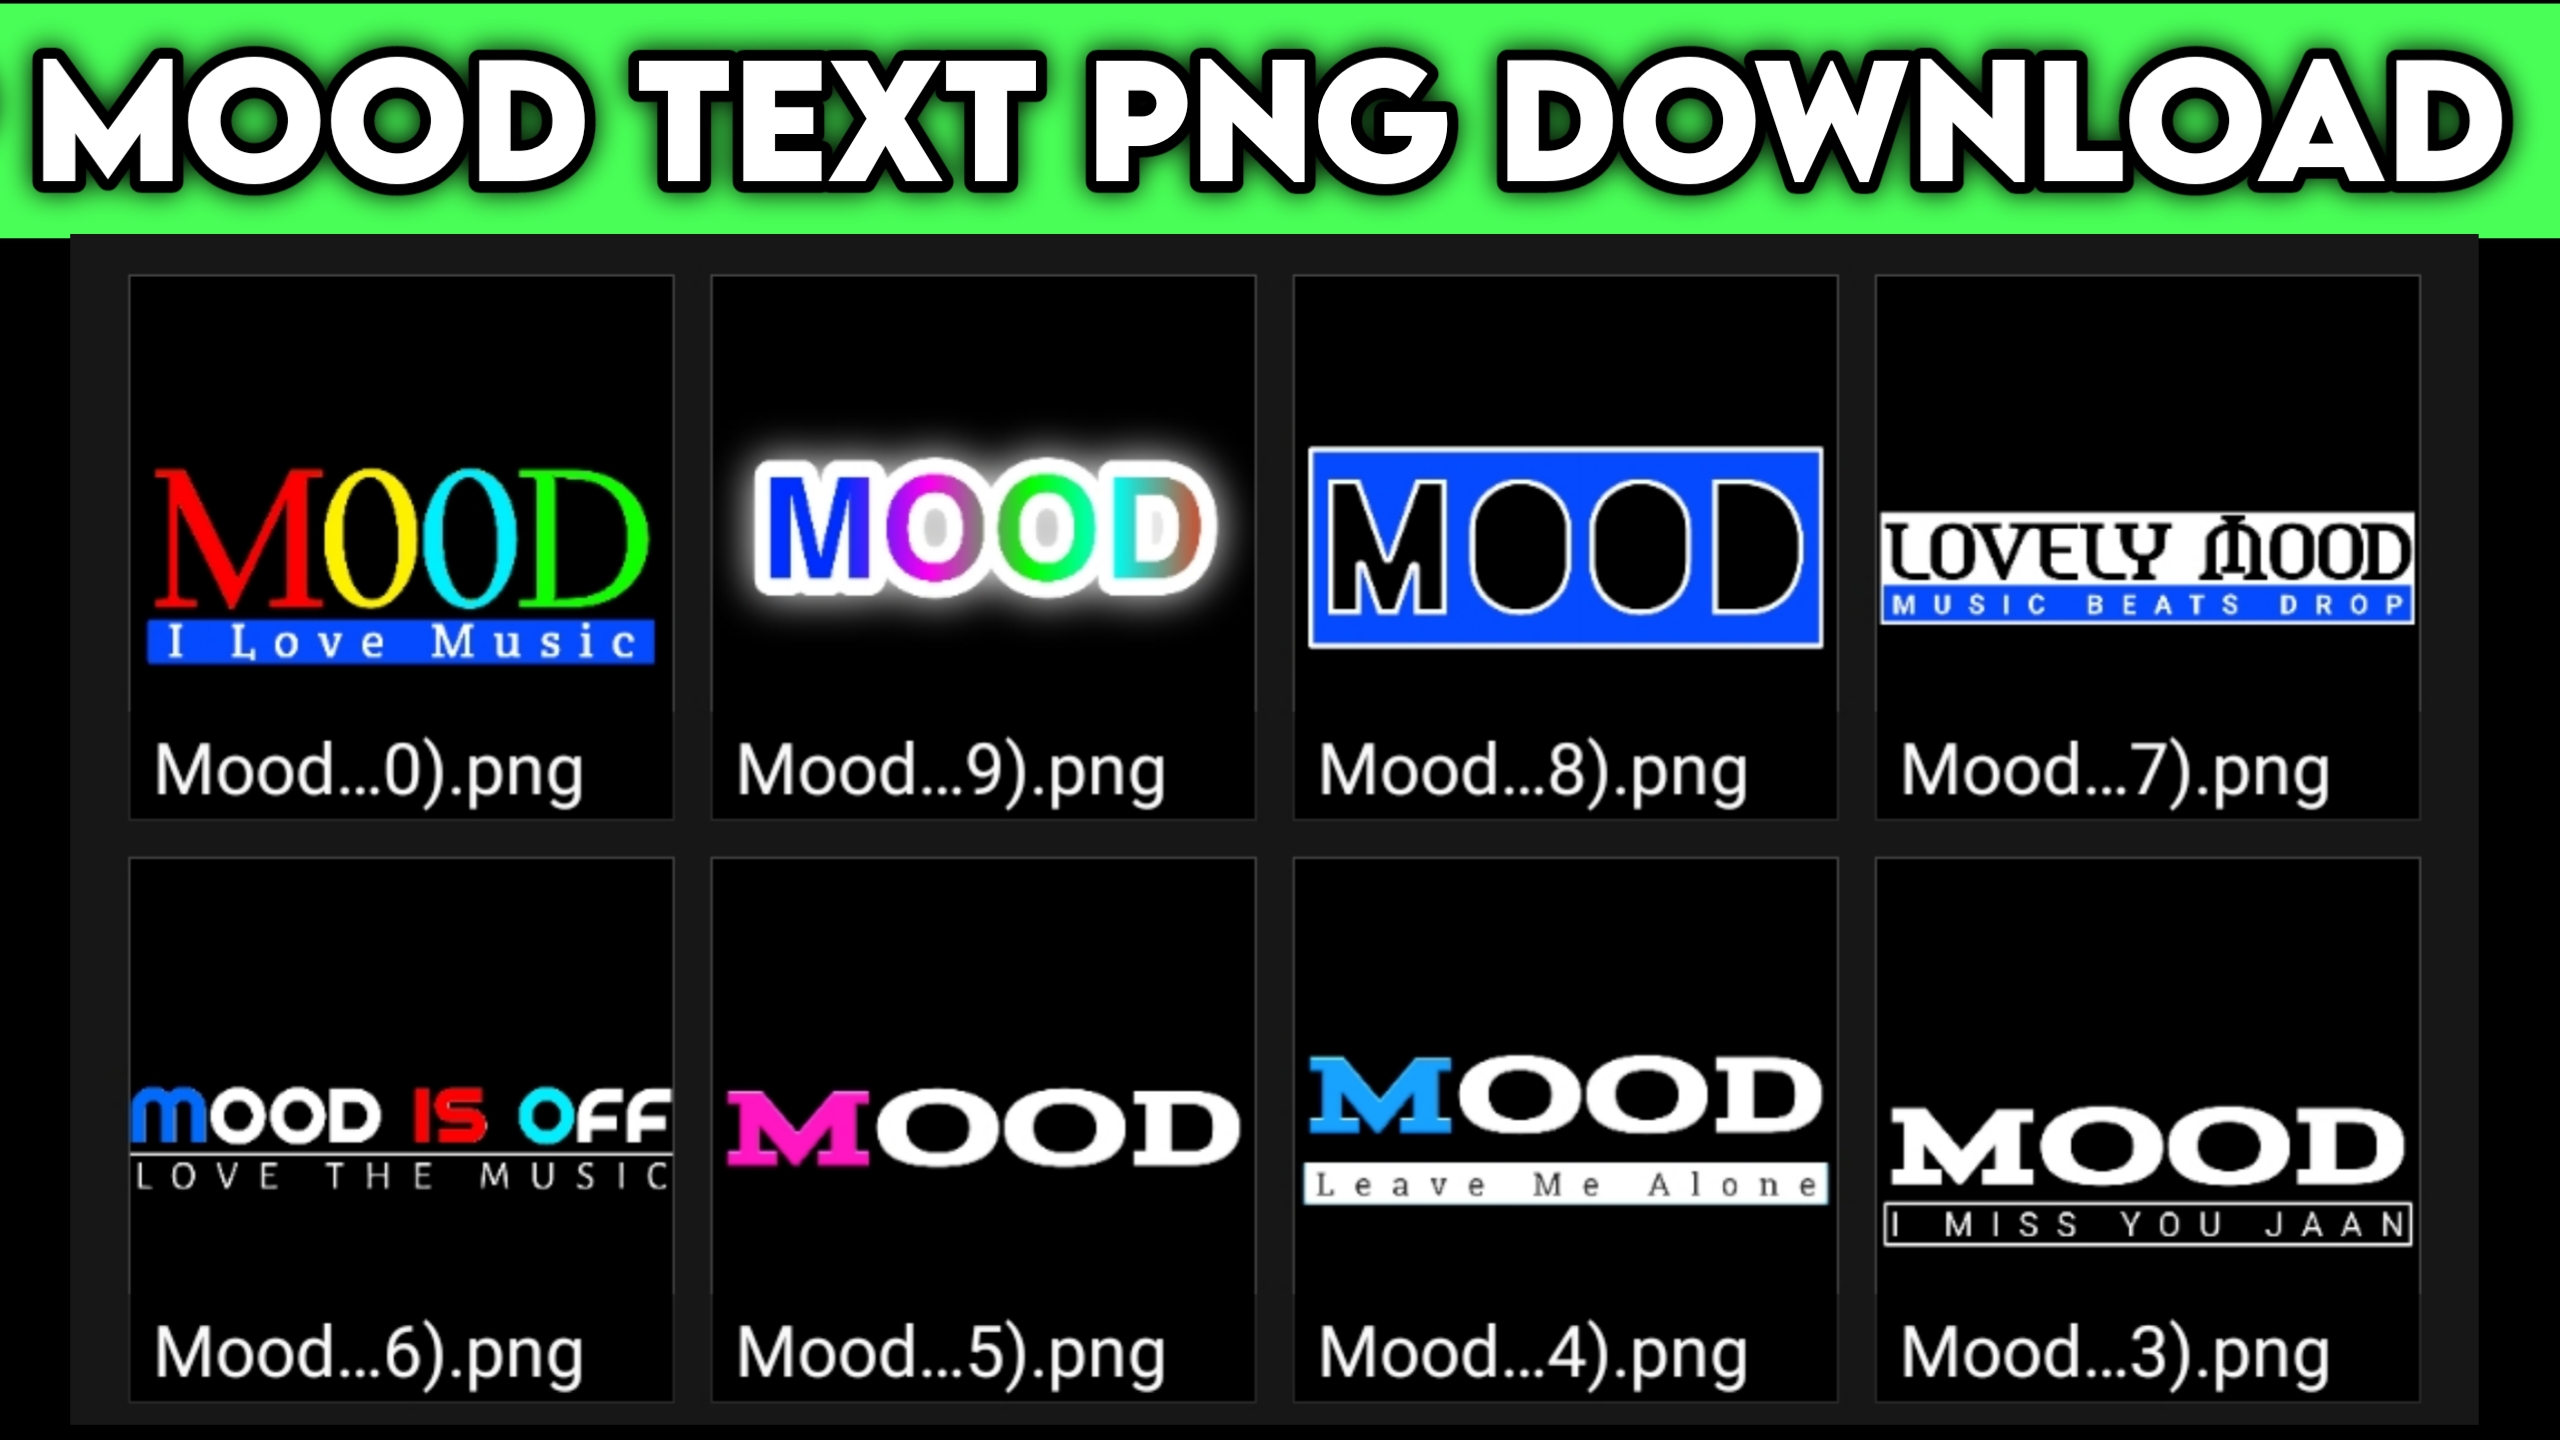 Mood Text PNG Download Top 10 Png Free Download  2022 By DjDevrajKasya